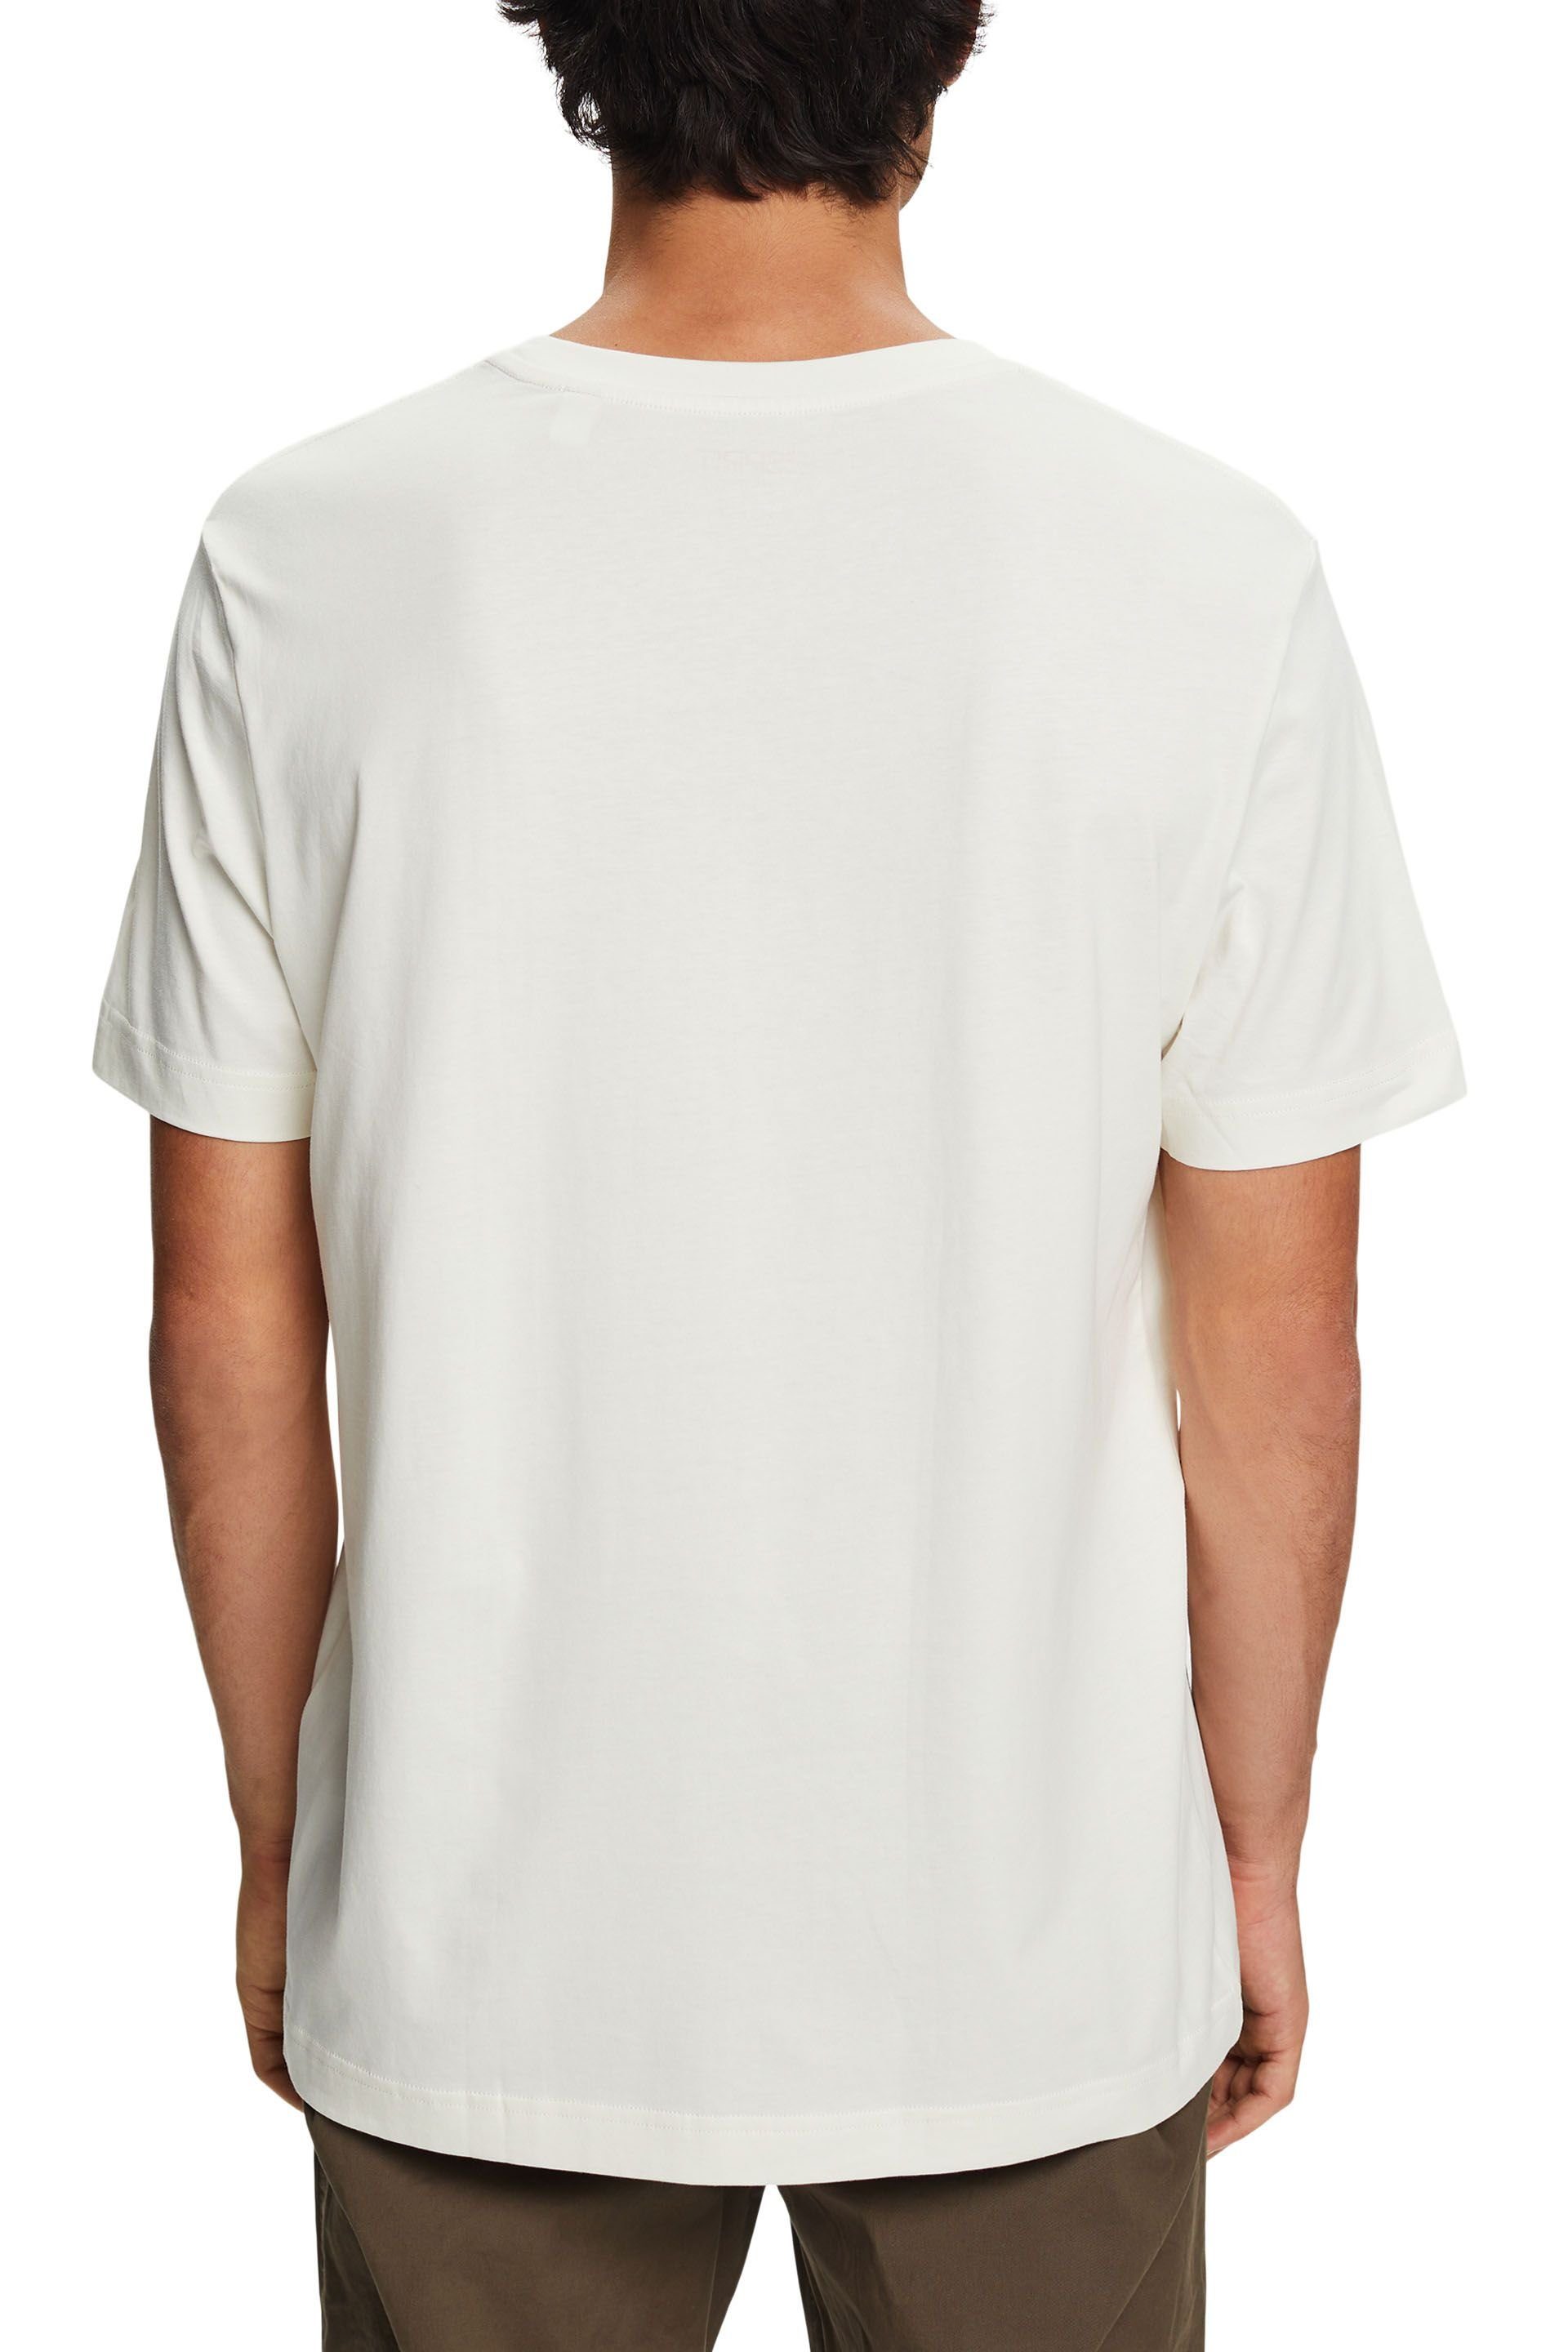 ice Esprit T-Shirt